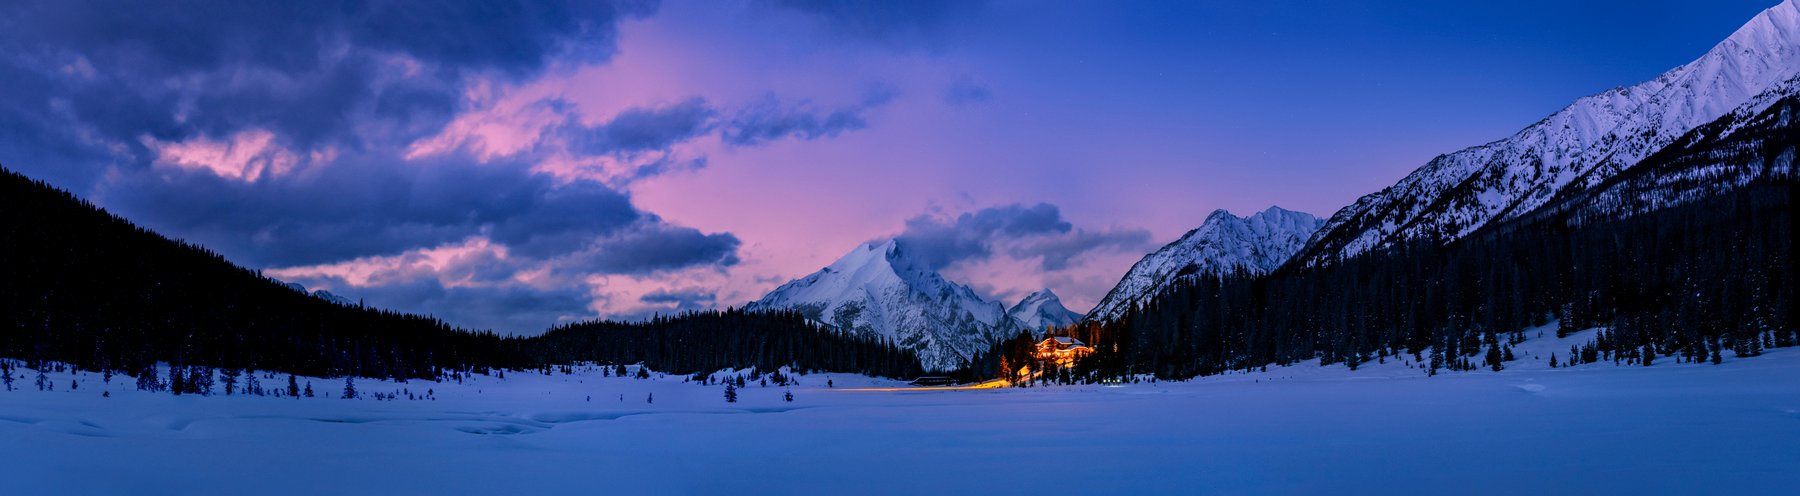 Sunset view of Mount Engadine Lodge